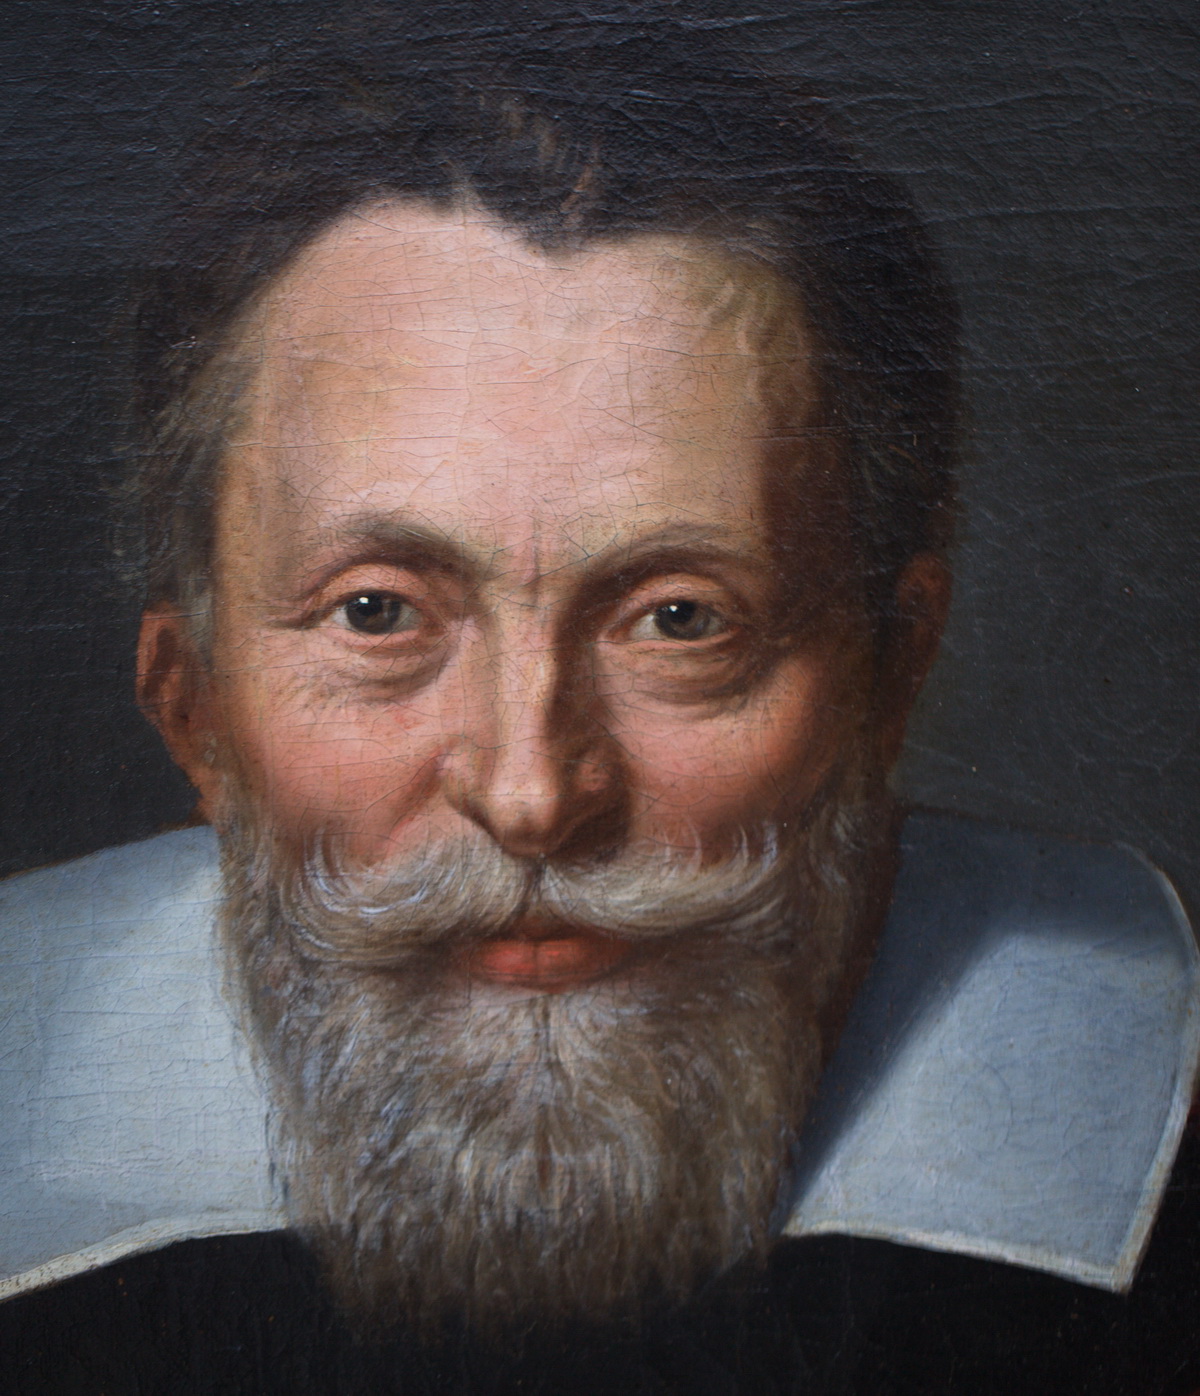 Abaham de Vries 1590-1662  awarded